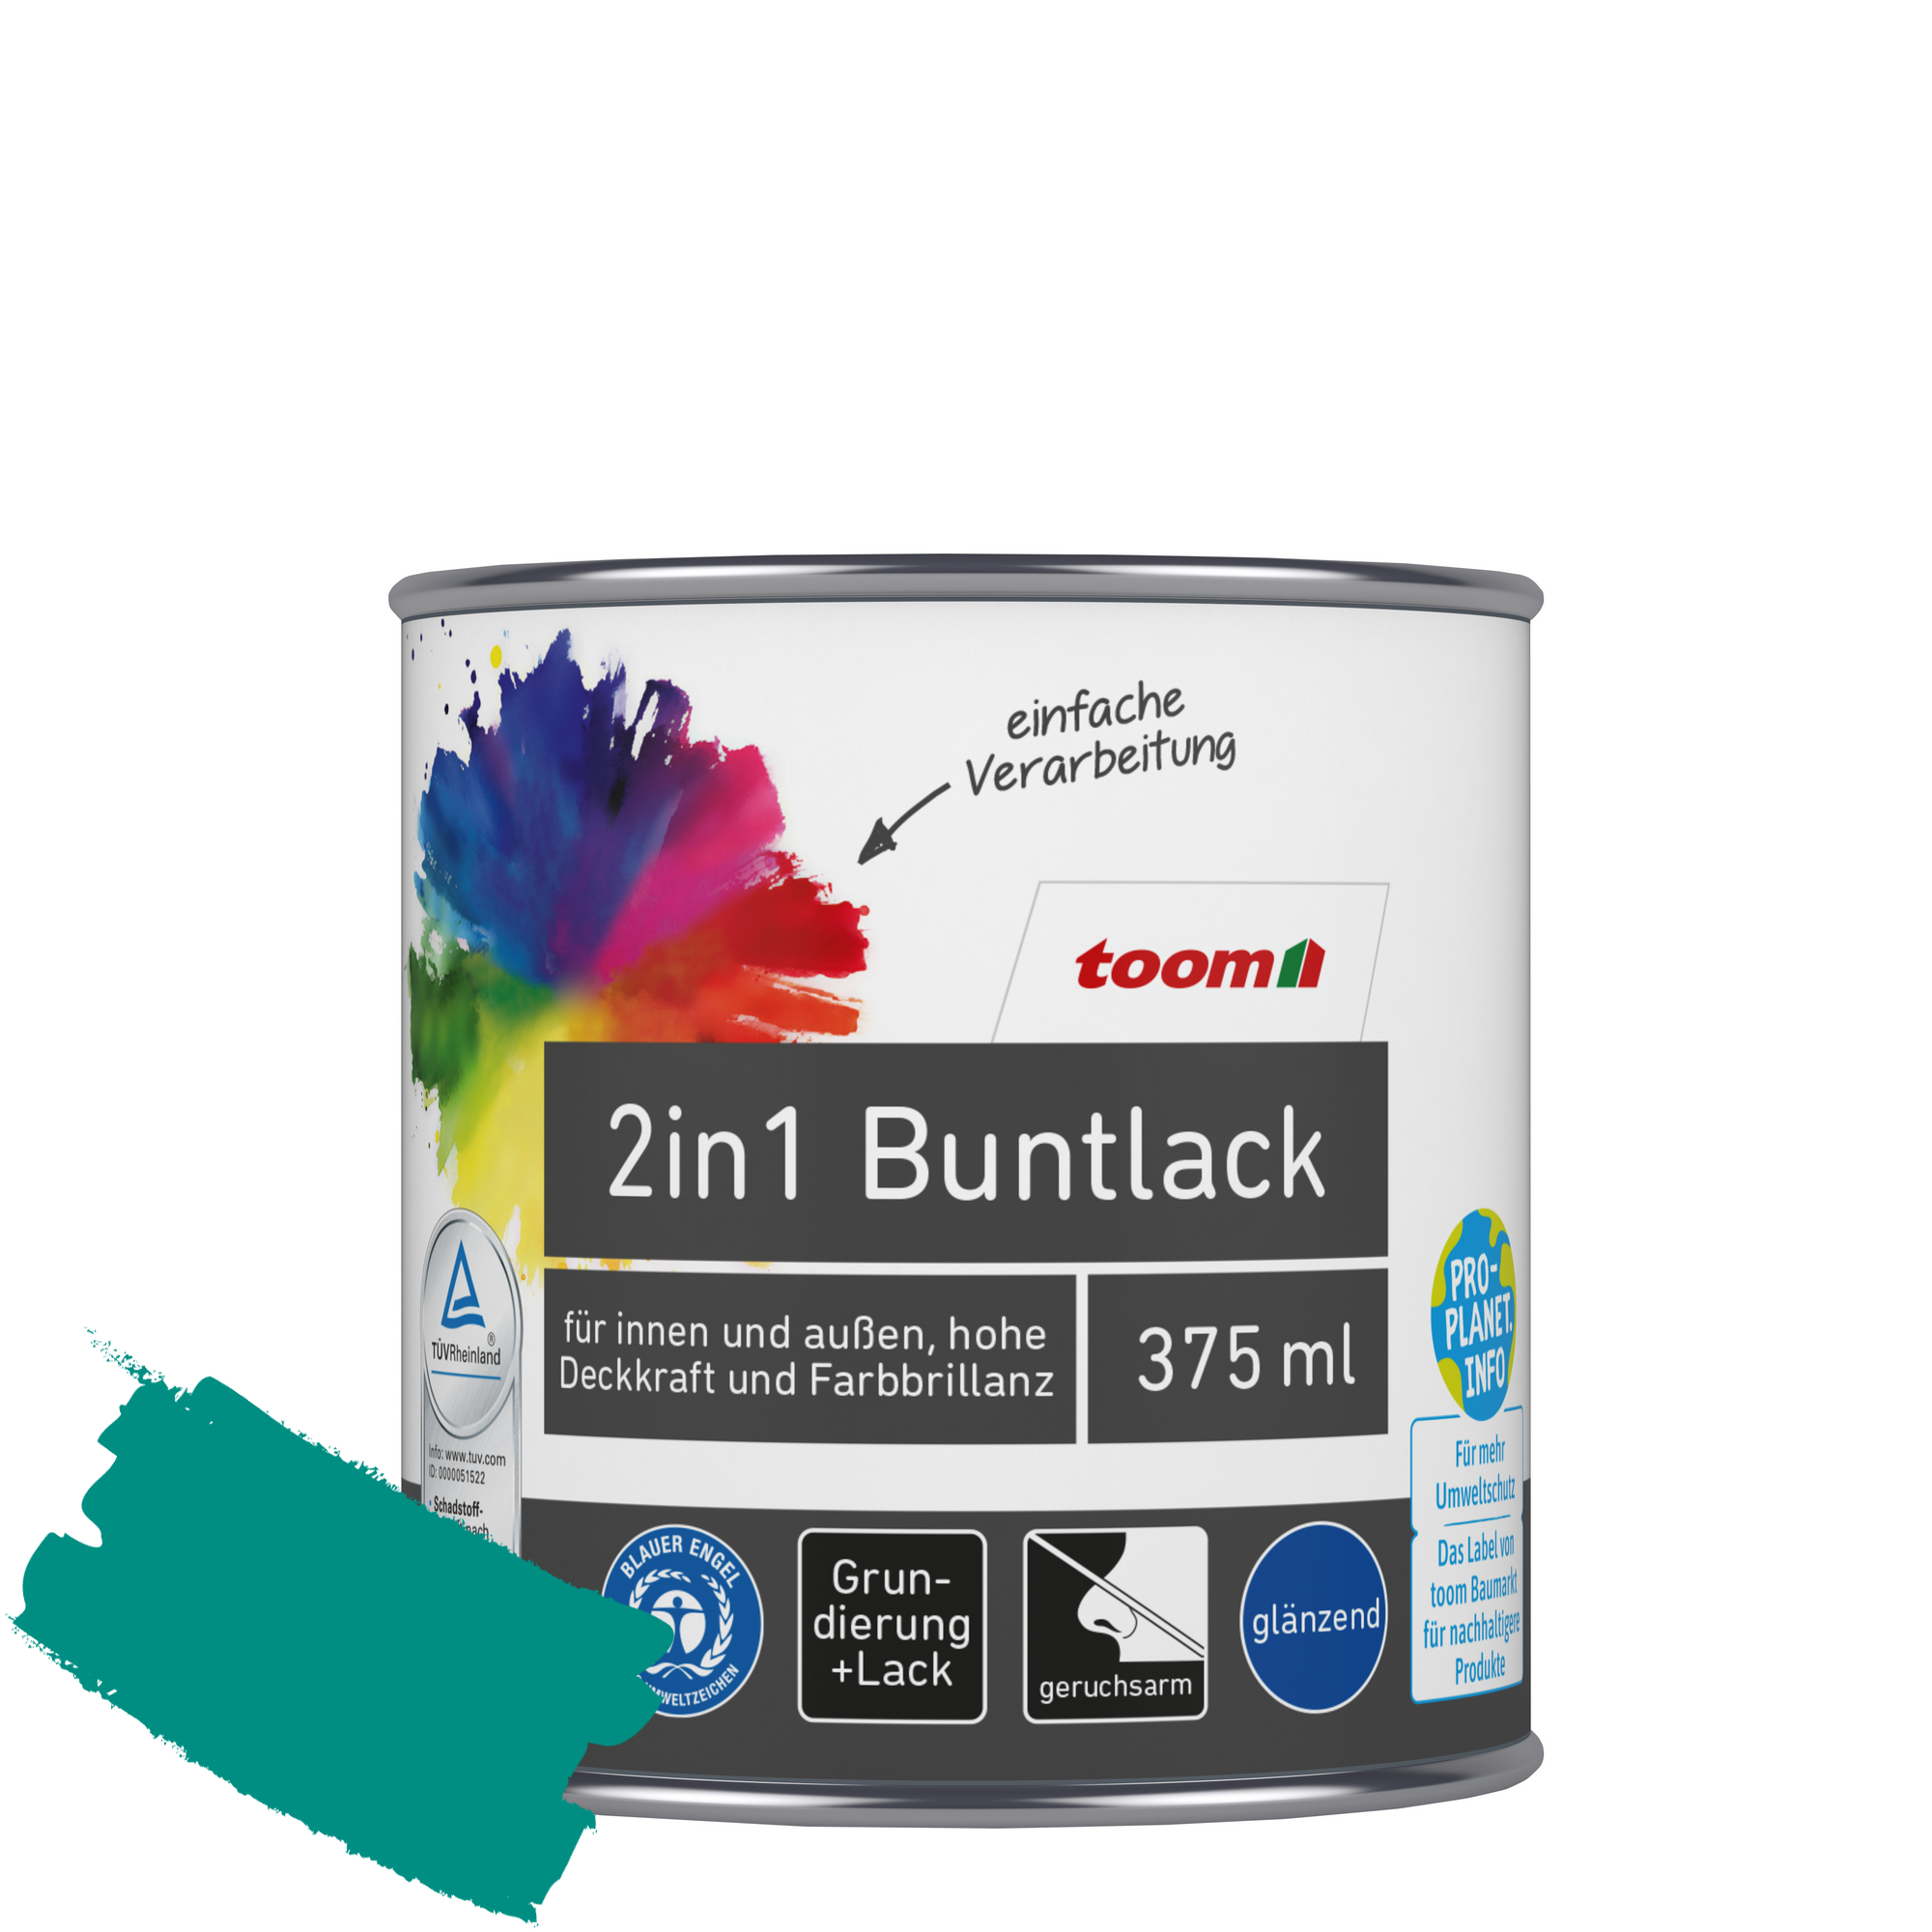 2in1 Buntlack 'Südseetraum' petrolfarben glänzend 375 ml + product picture